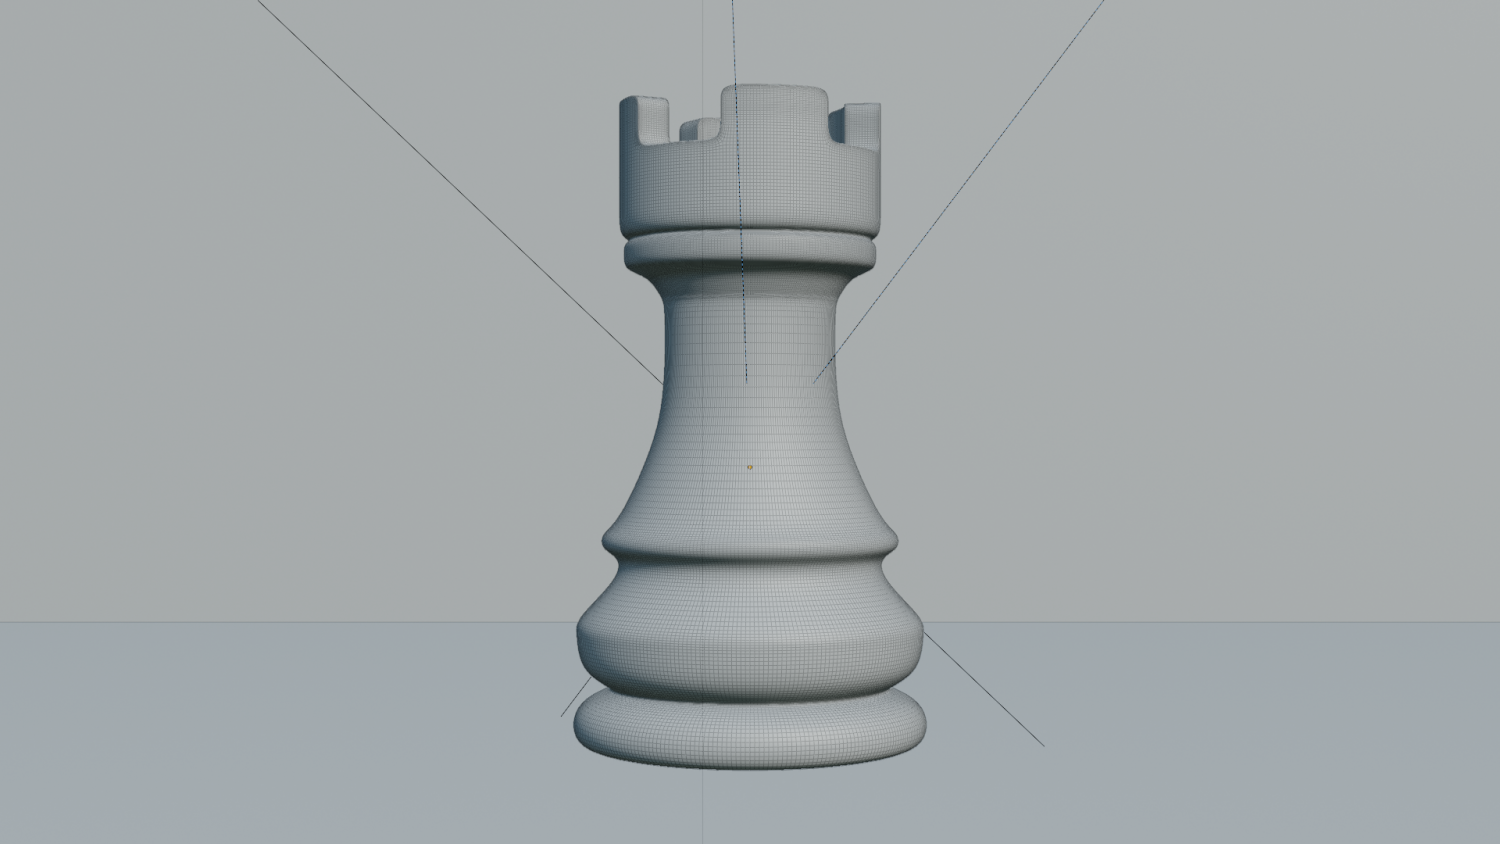 Blender Beginner's Tutorial - Make a Chess Rook 